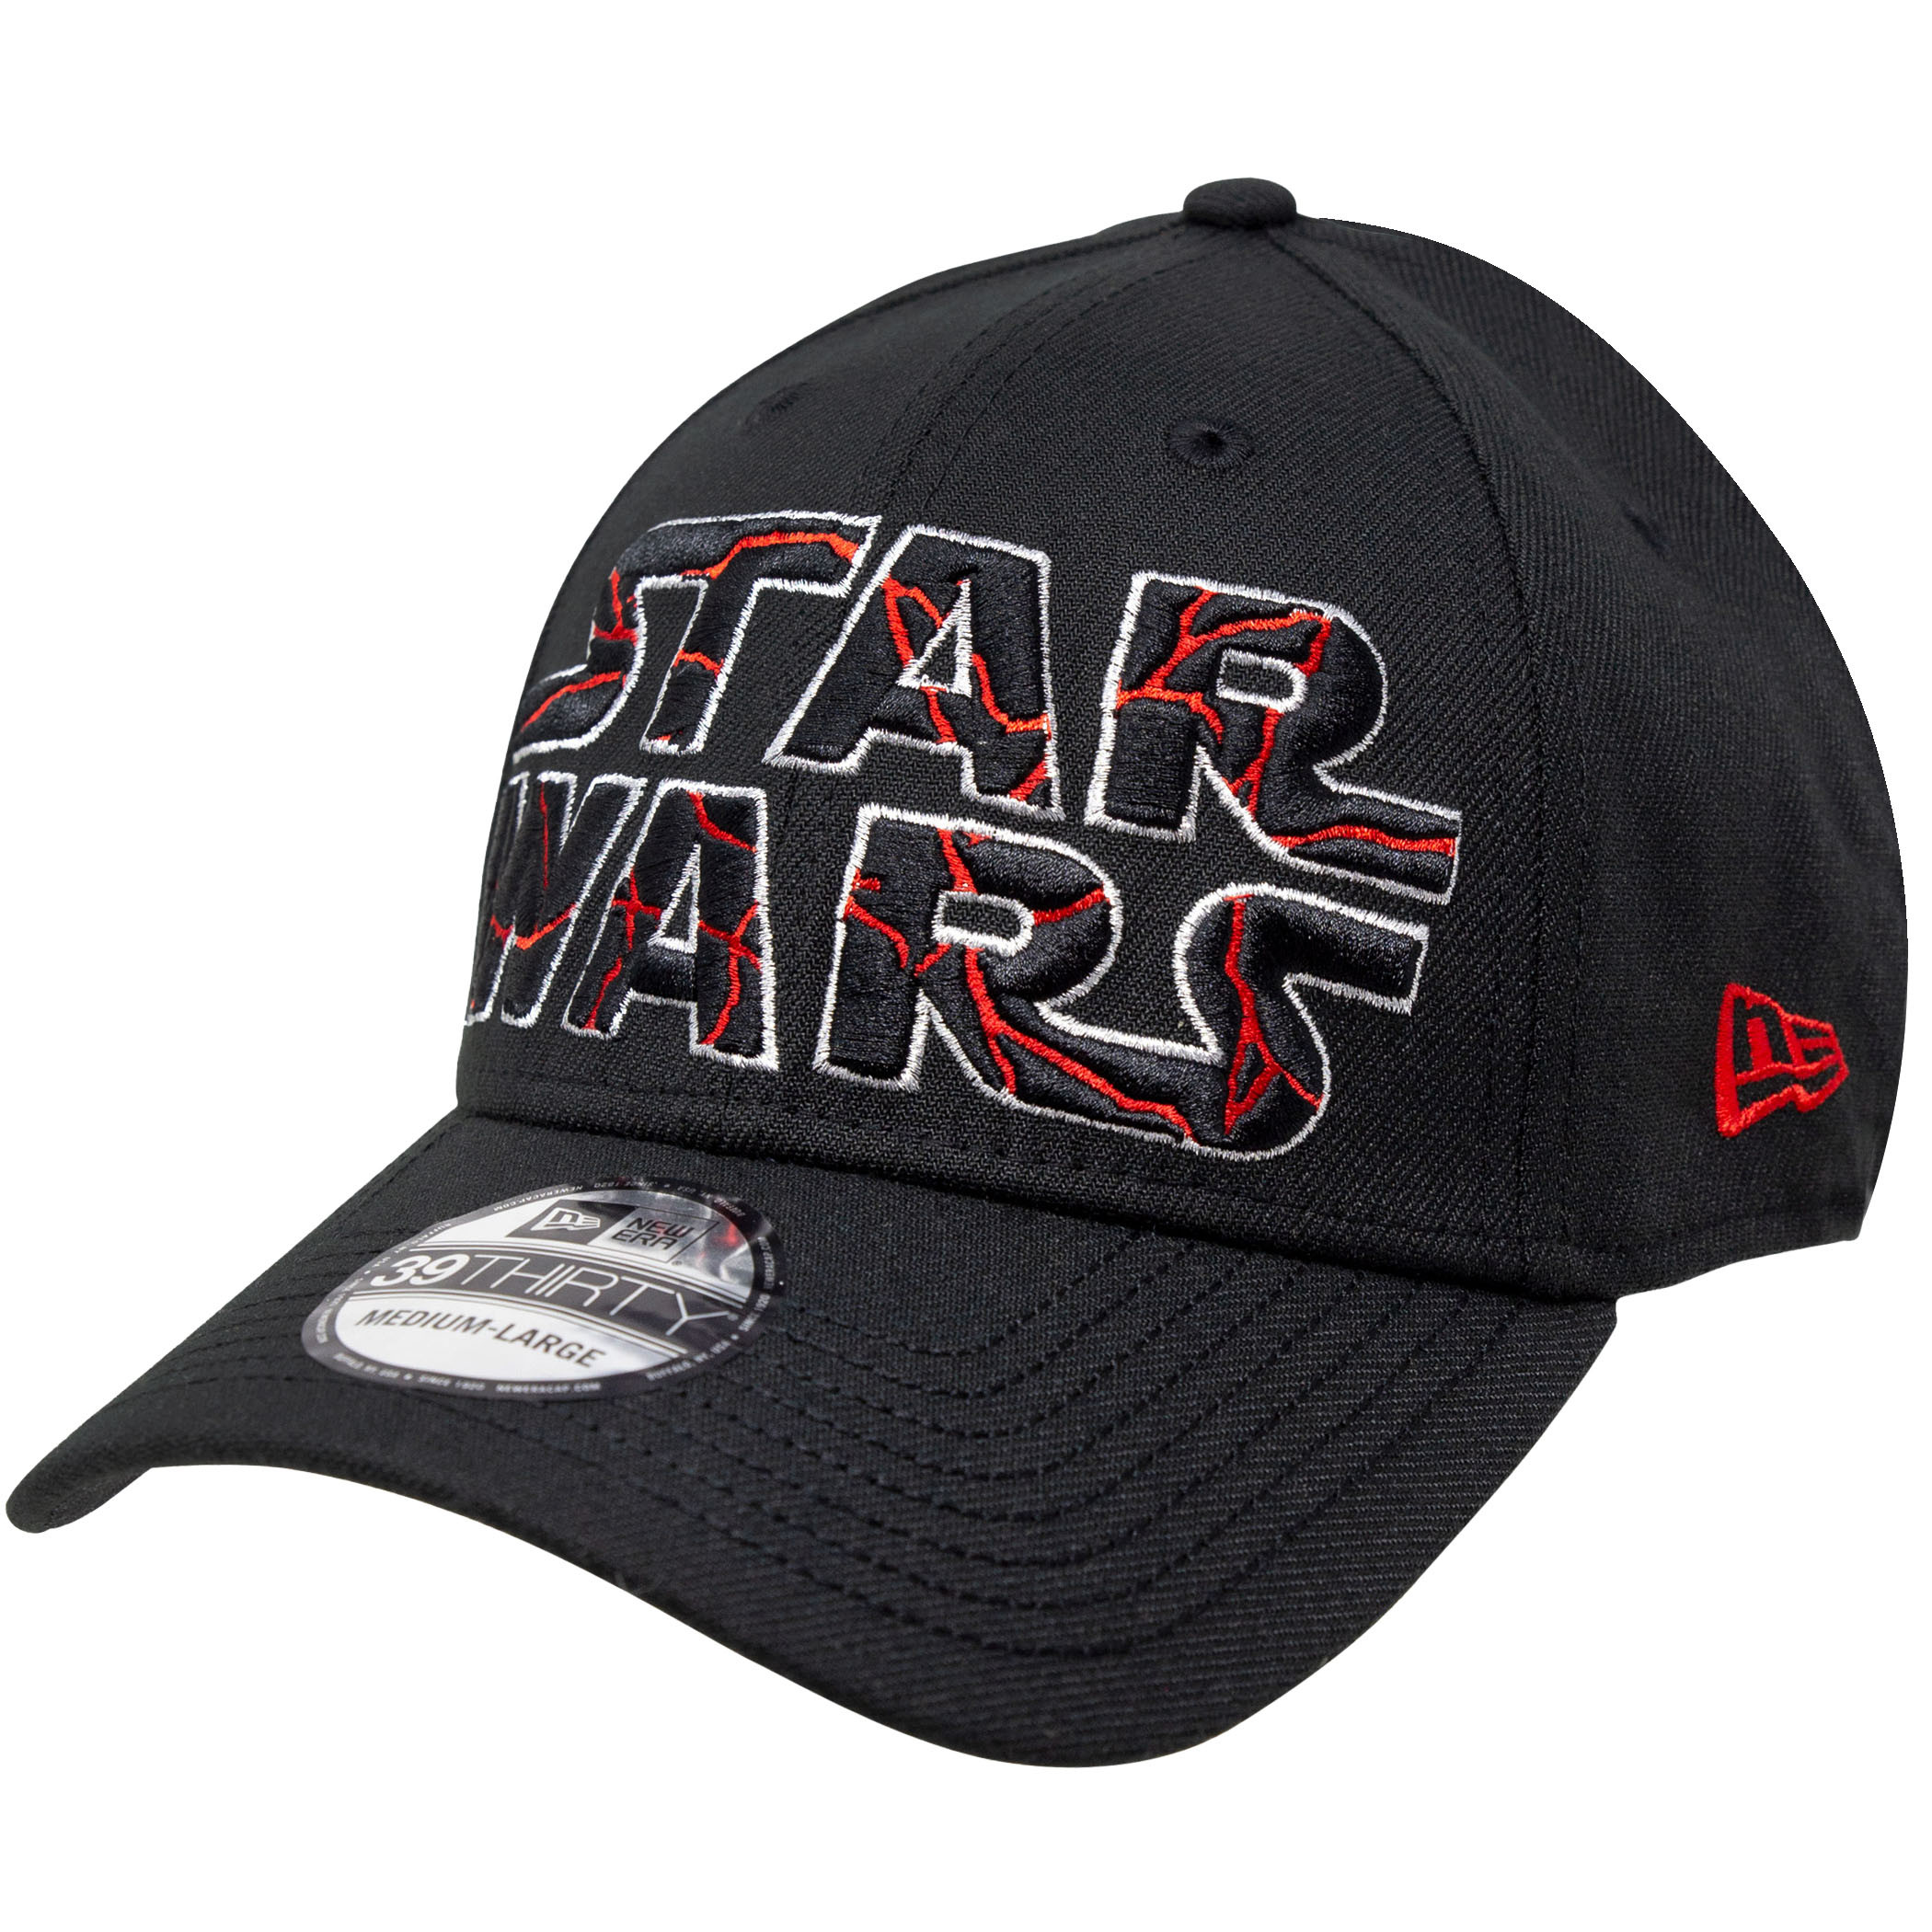 NWT Disney Star Wars the Force Awakens Glow in the Dark Hat New Era 39Thirty 